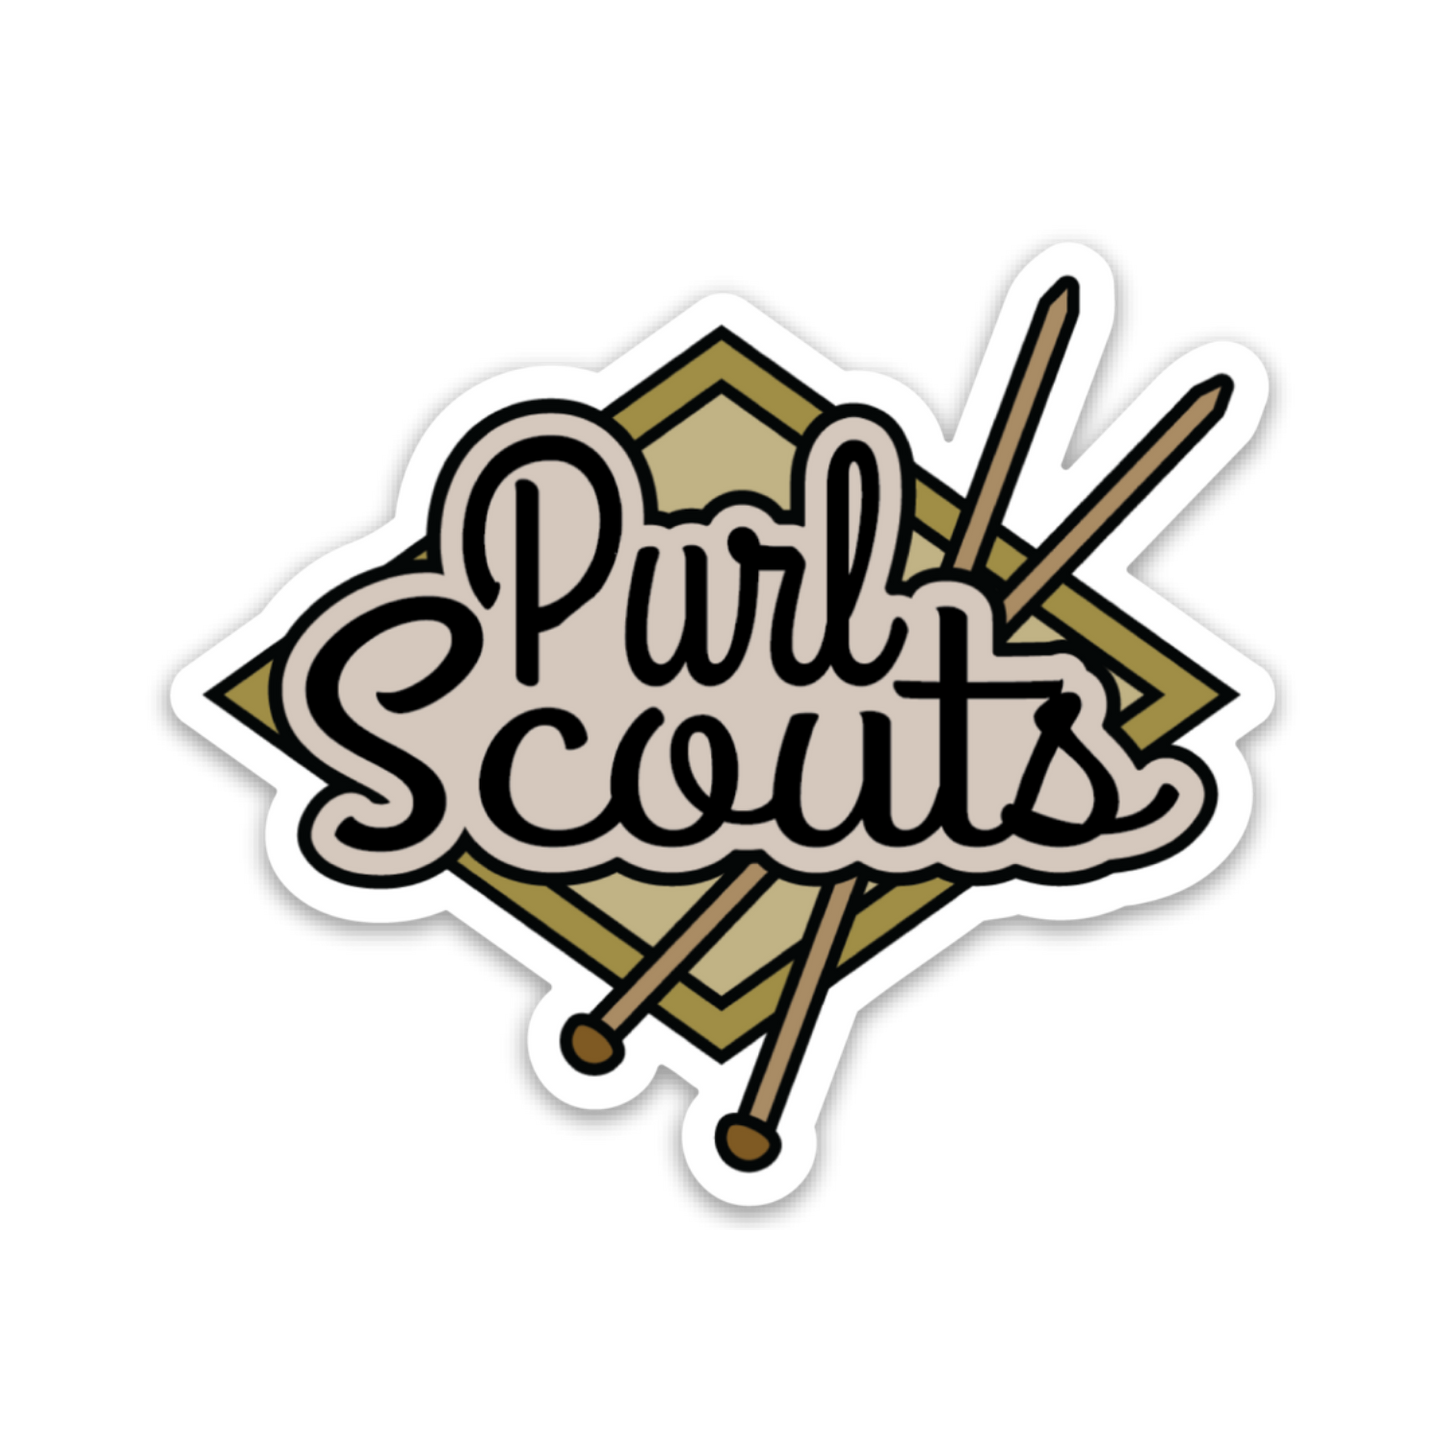 Purl Scouts Sticker